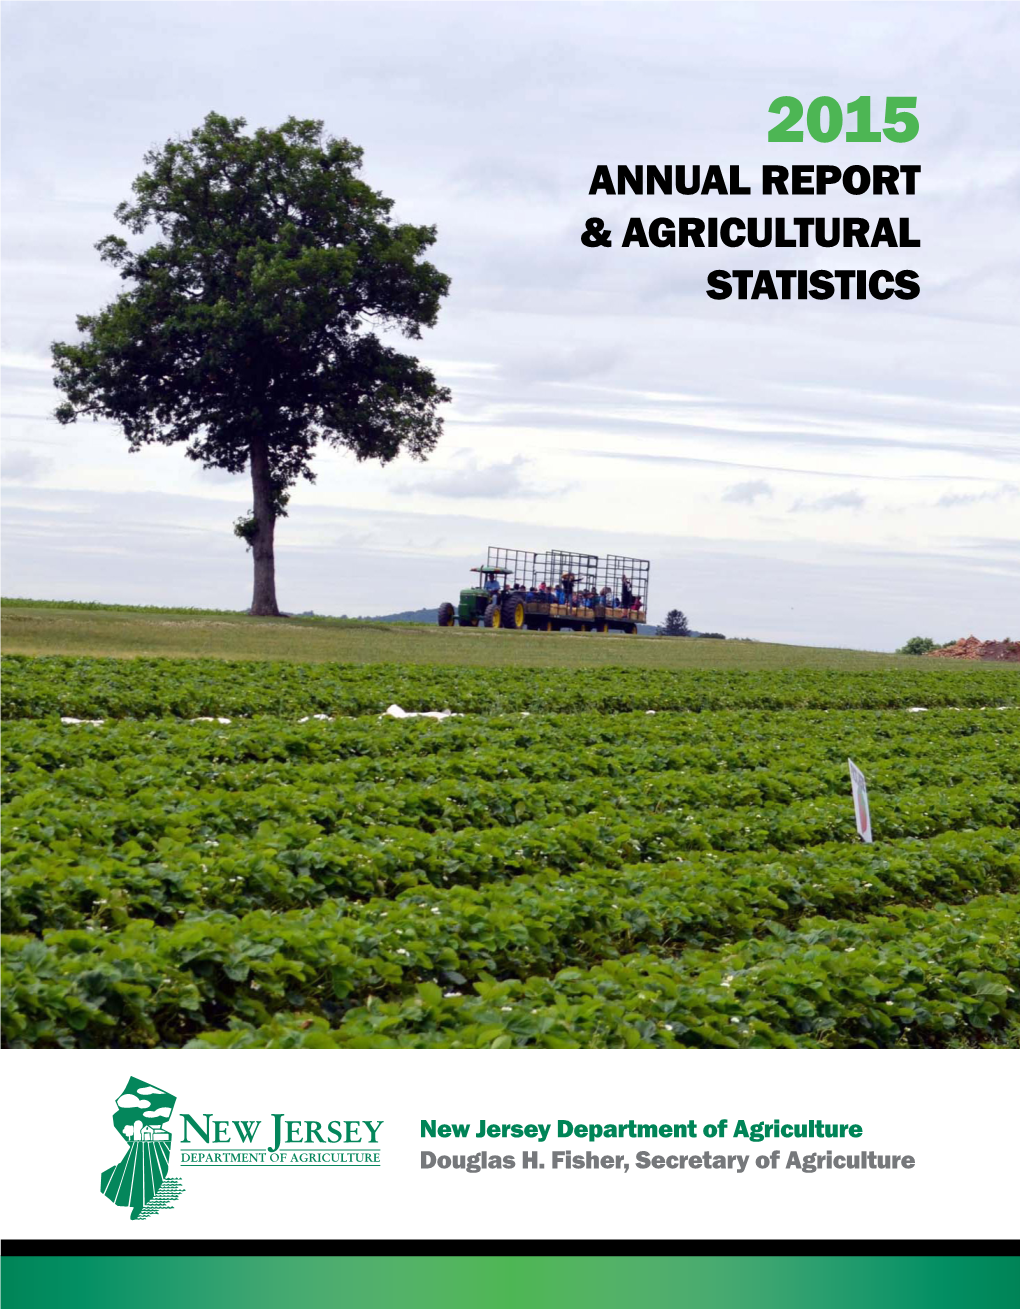 Annual Report & Agricultural Statistics